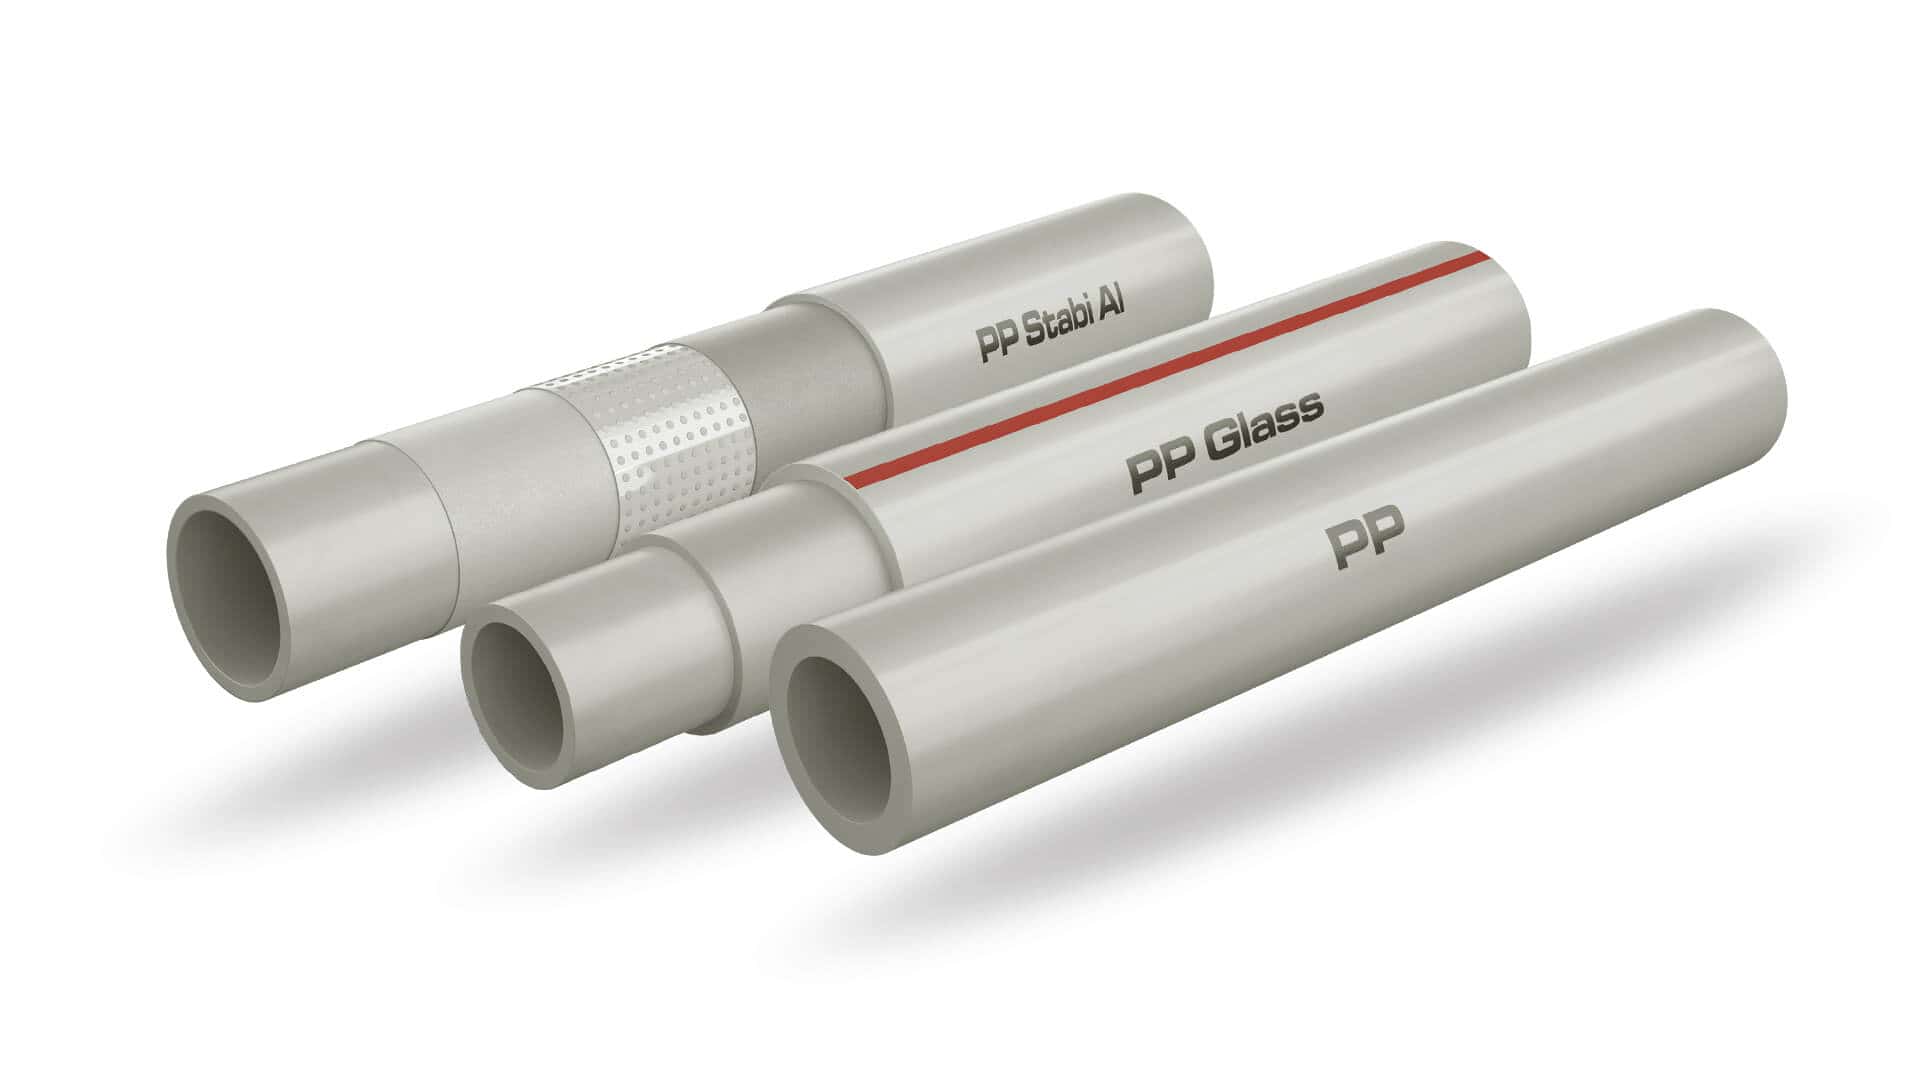 KAN-therm - Systém PP - Modely 3d trubek systémy PP - PP, PP Glass a PP Stabi